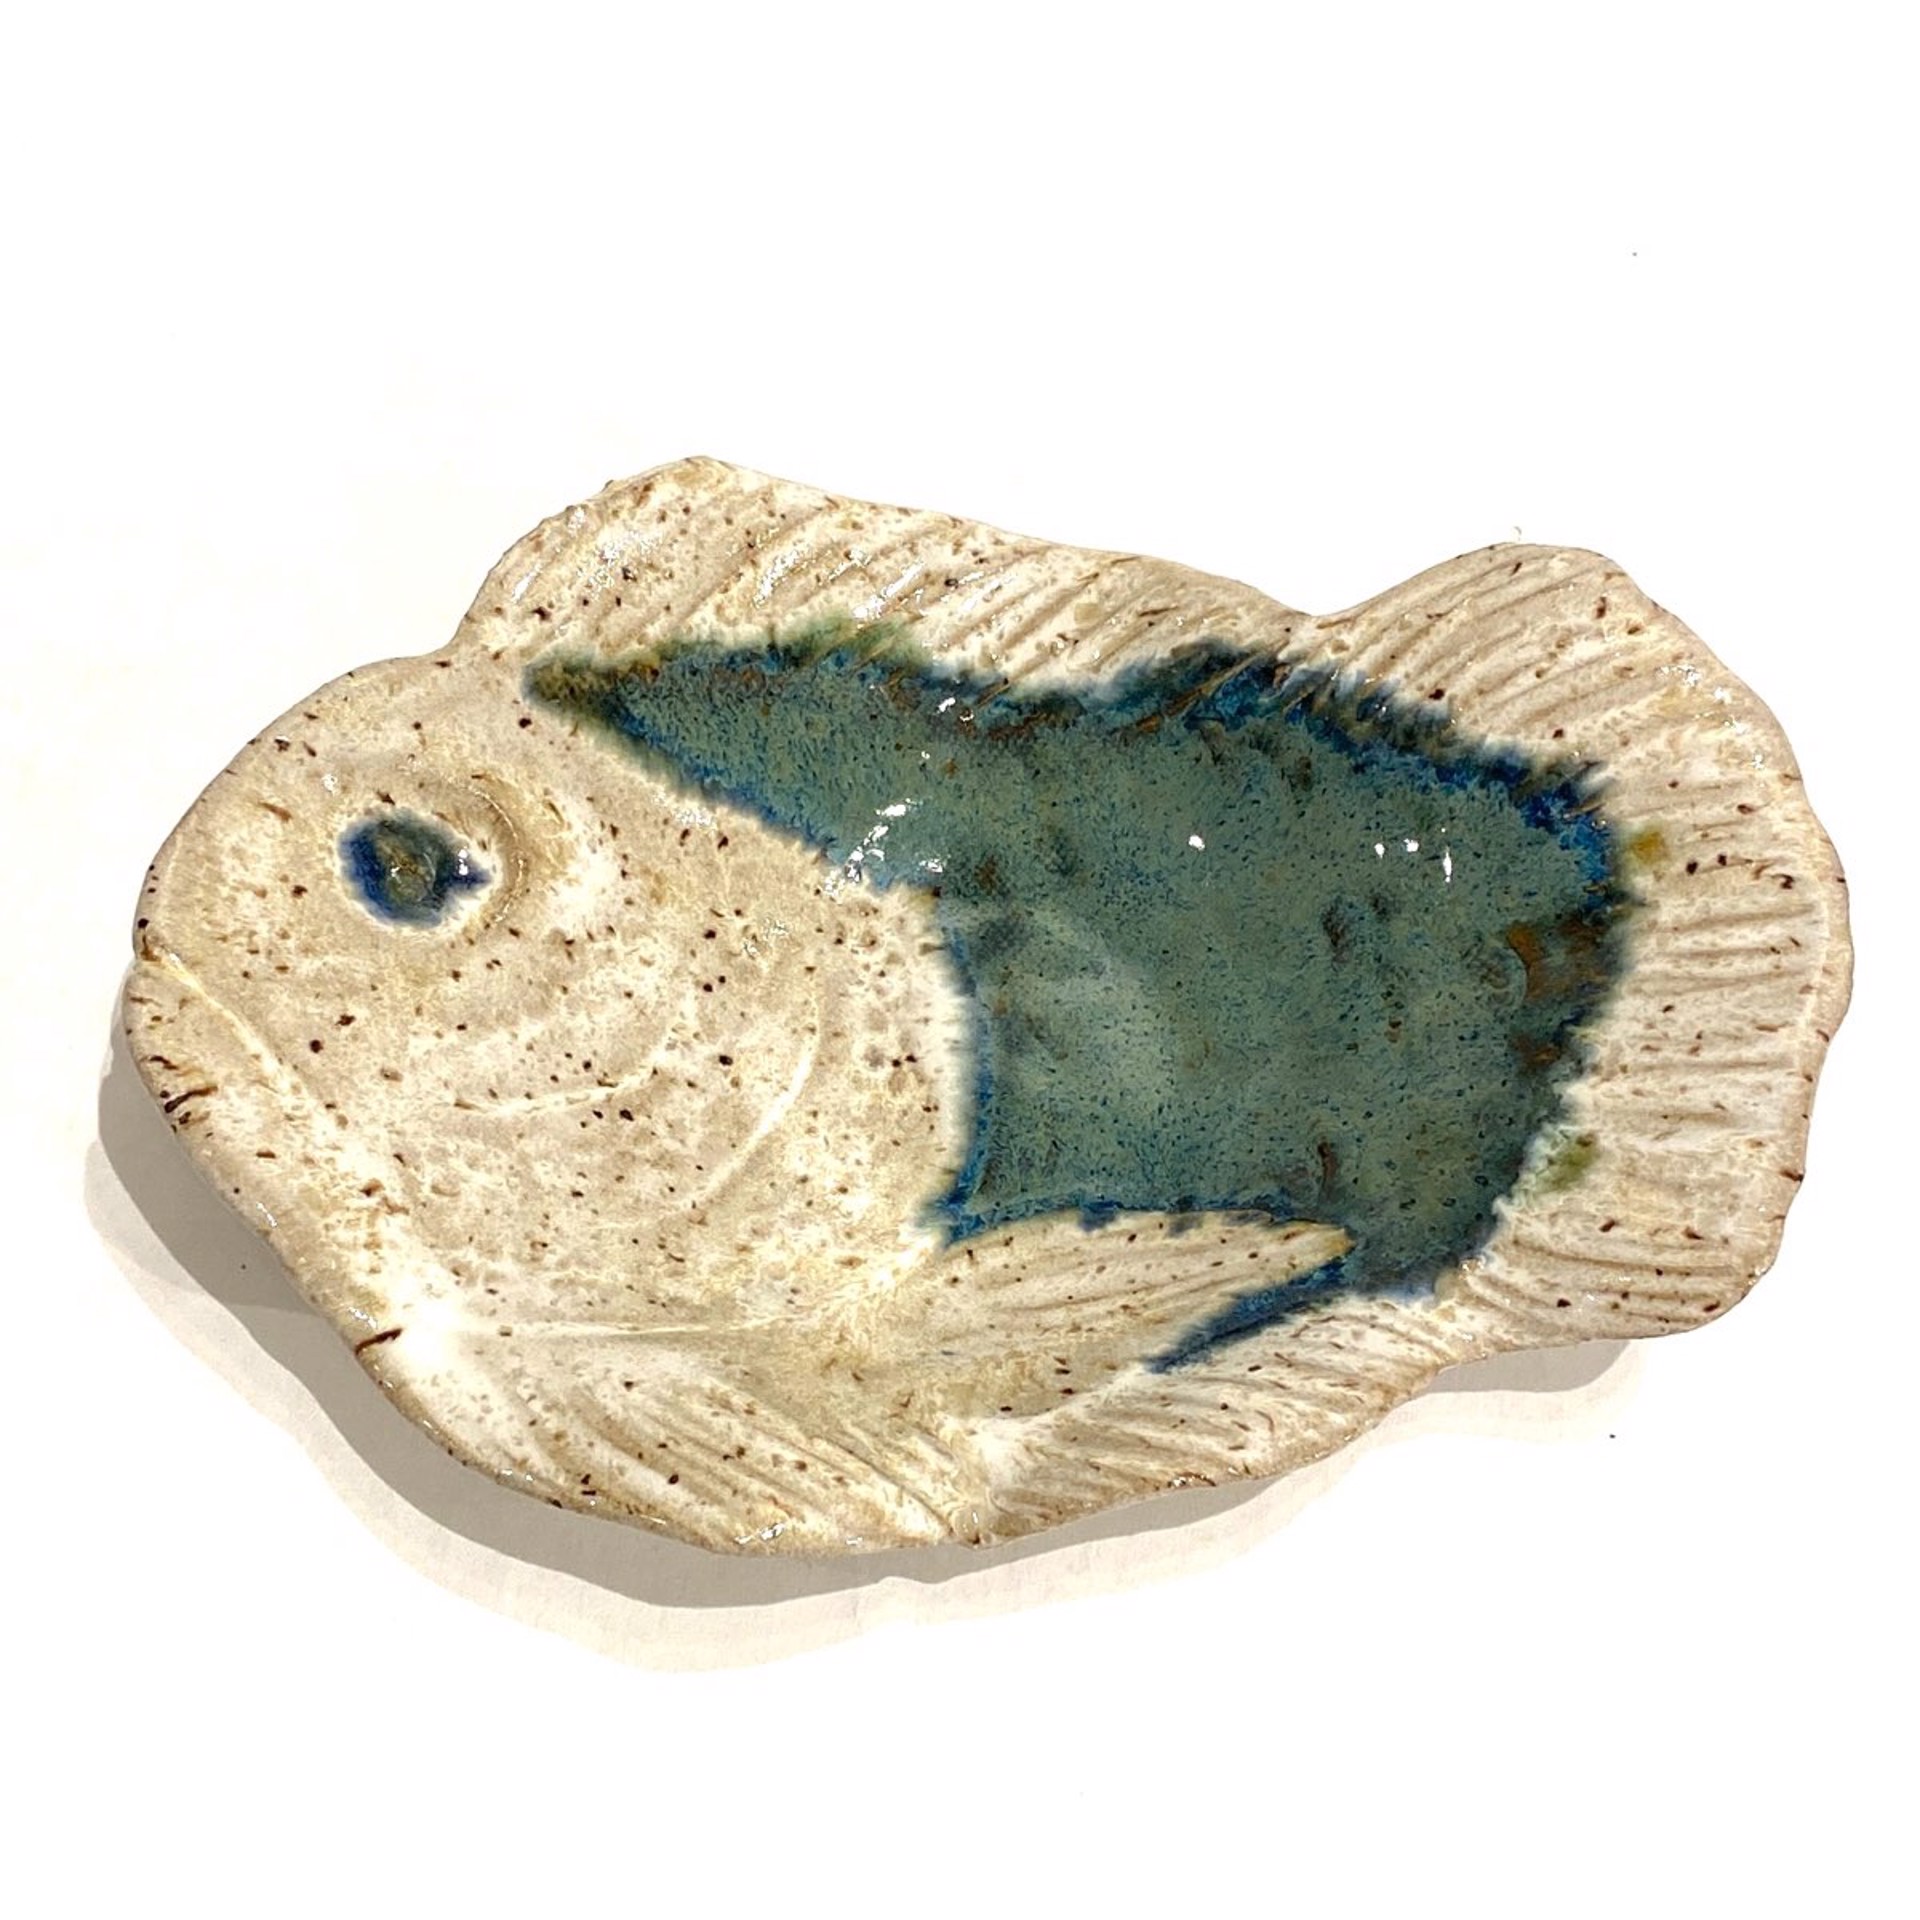 LG23-1001 Small “Fish” Bowl (Blue Glaze) by Jim & Steffi Logan